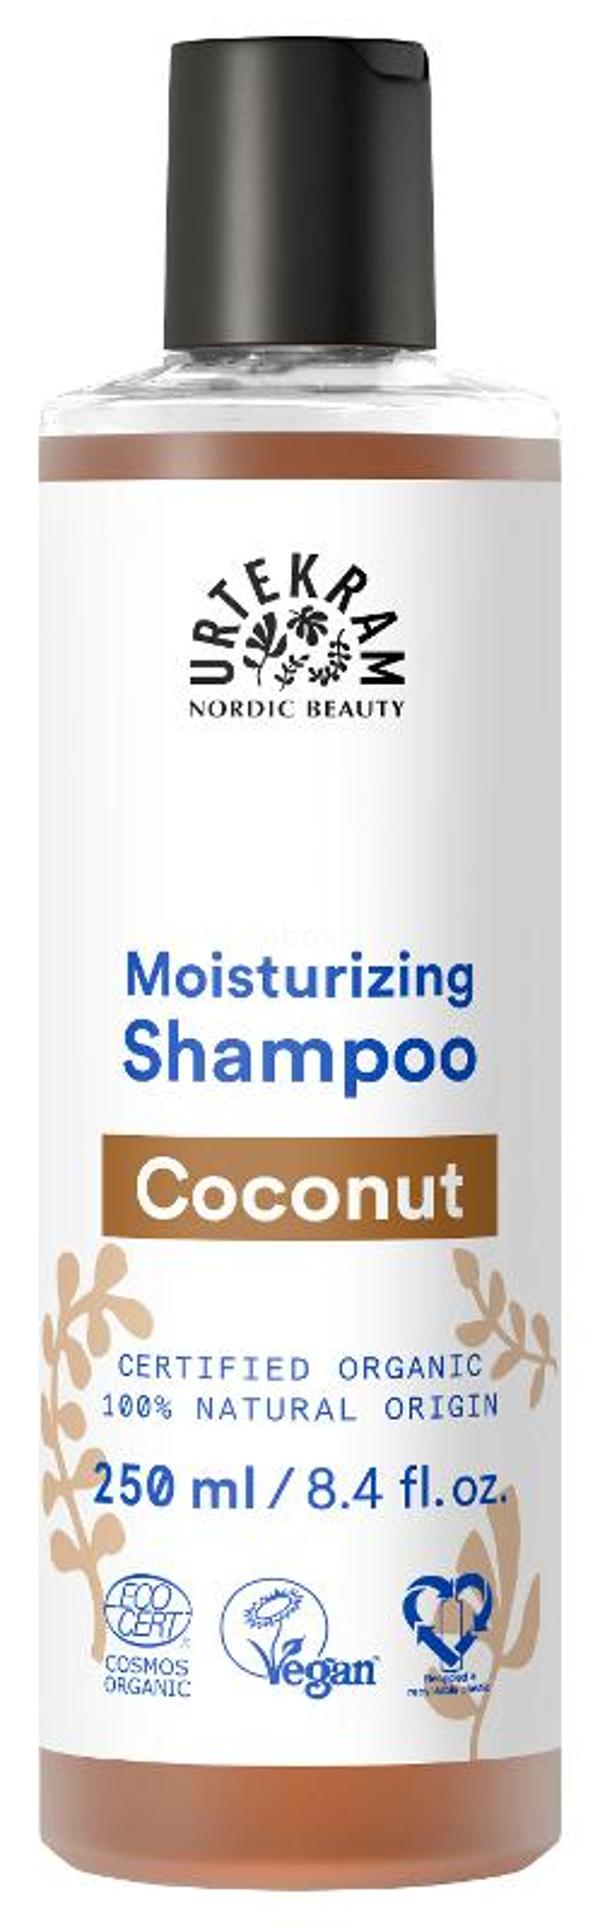 Produktfoto zu Kokos Shampoo - 250ml